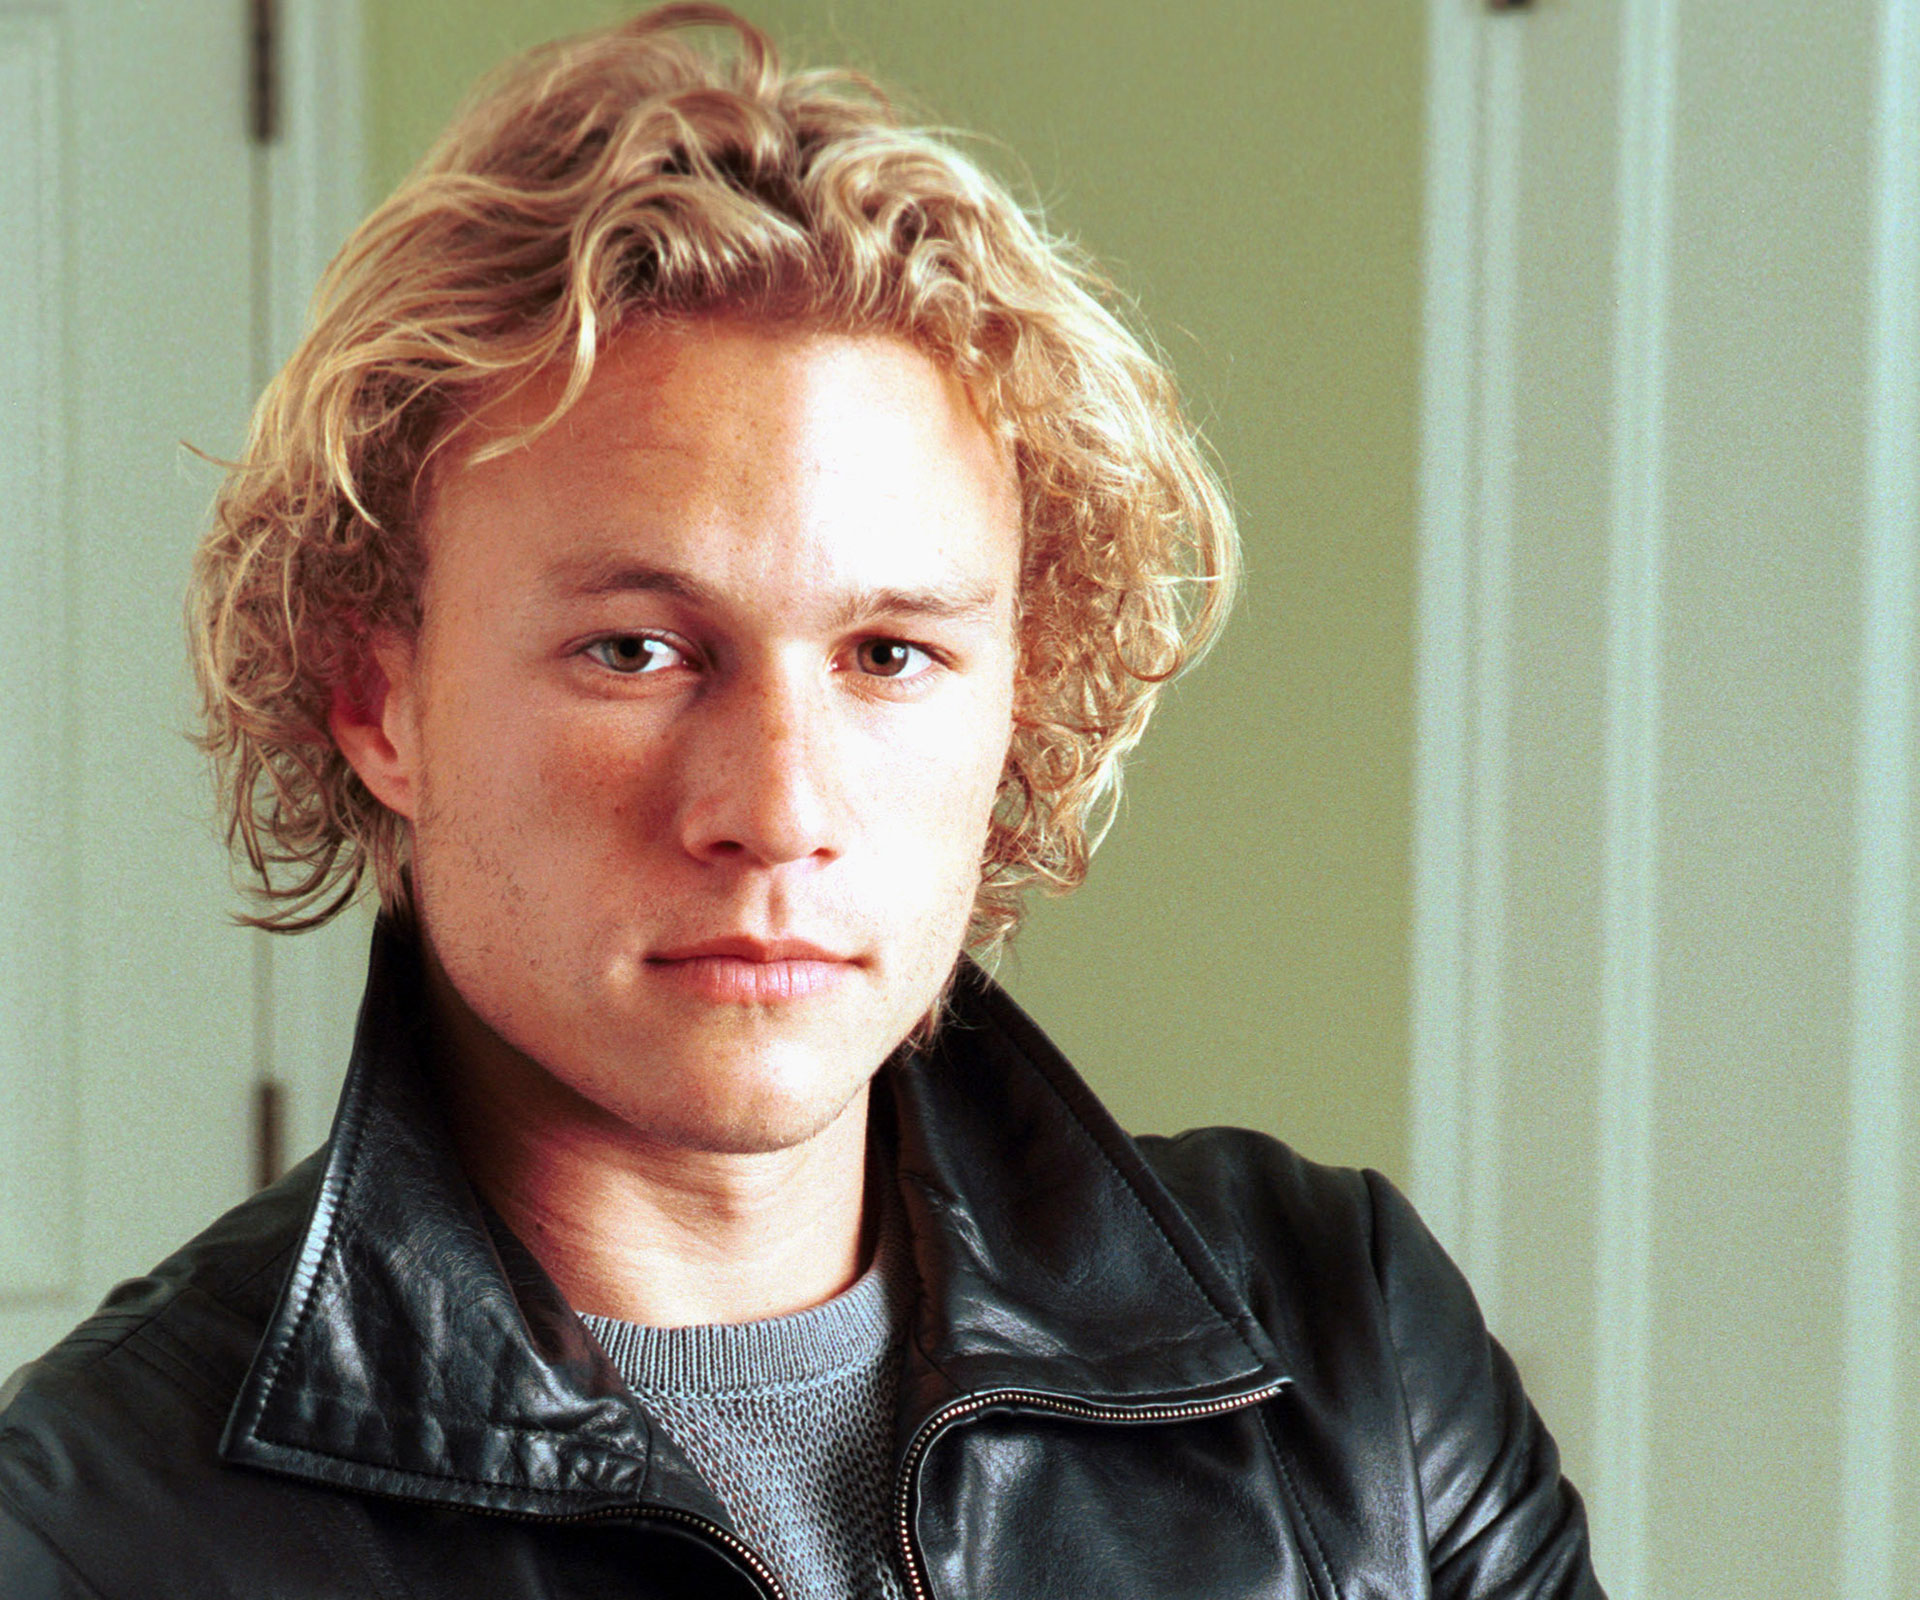 How Heath Ledger is saving lives after death